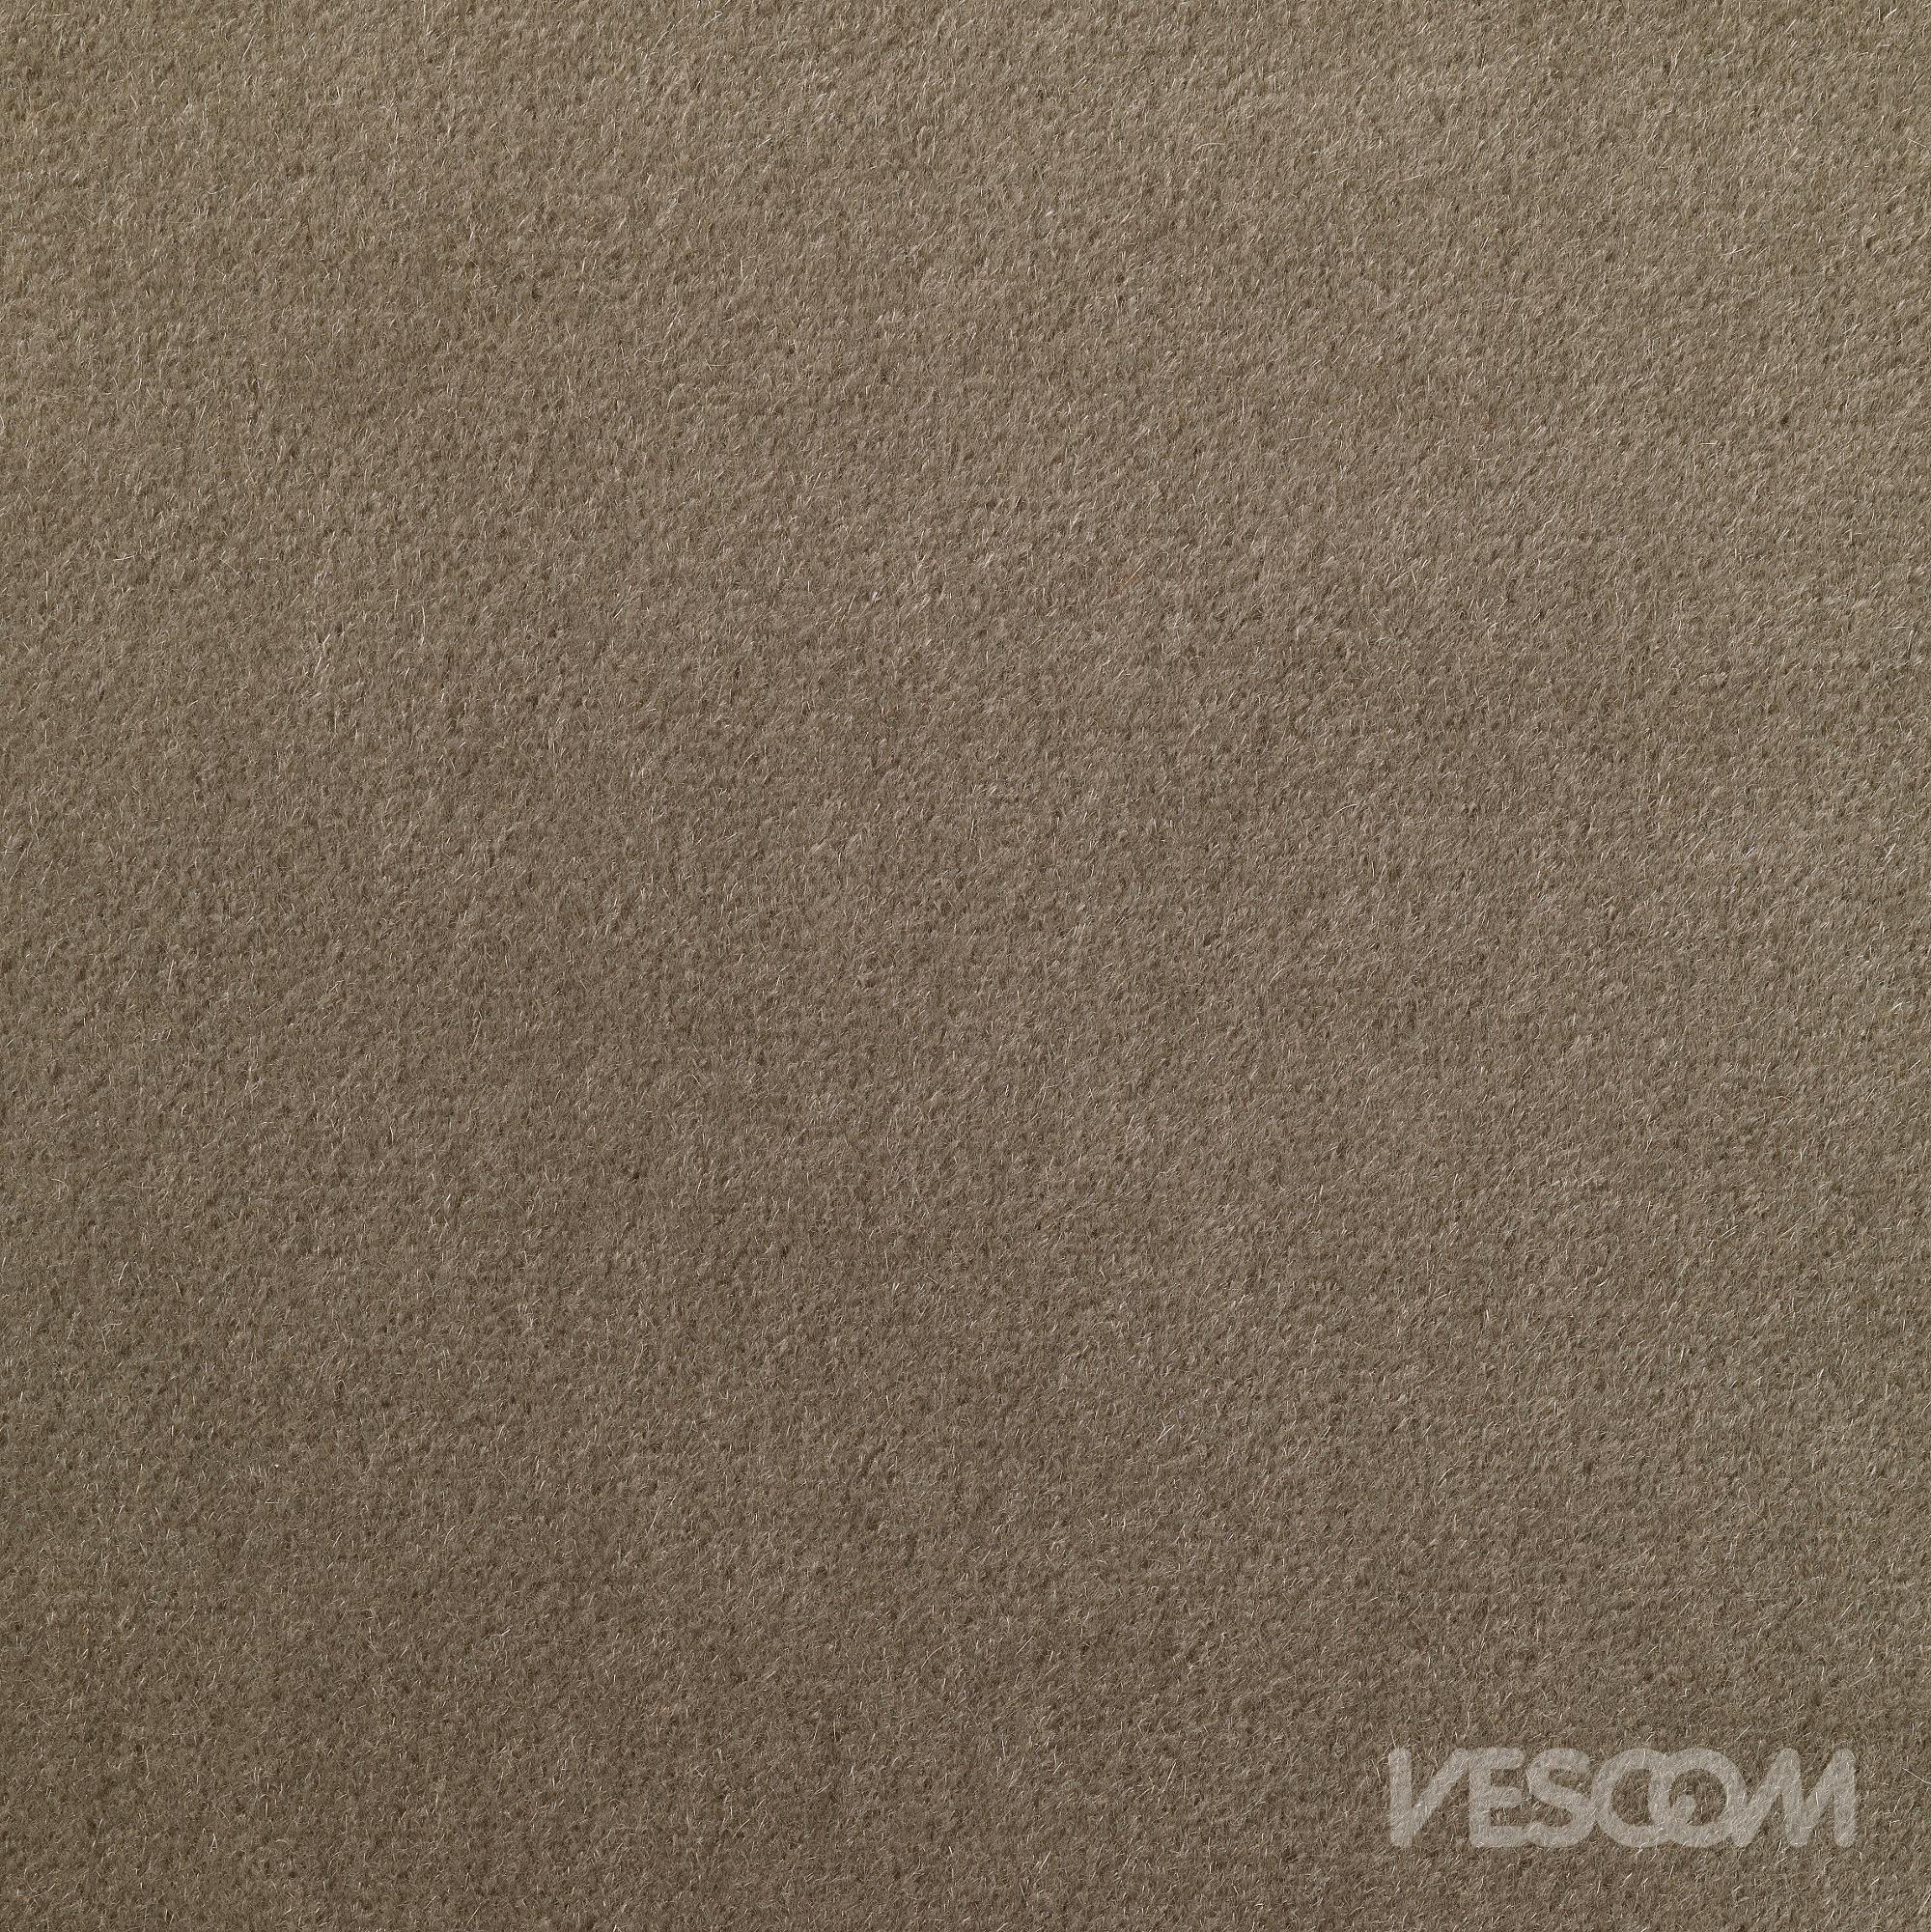 Vescom Ariana Upholstery Fabric 7061.08